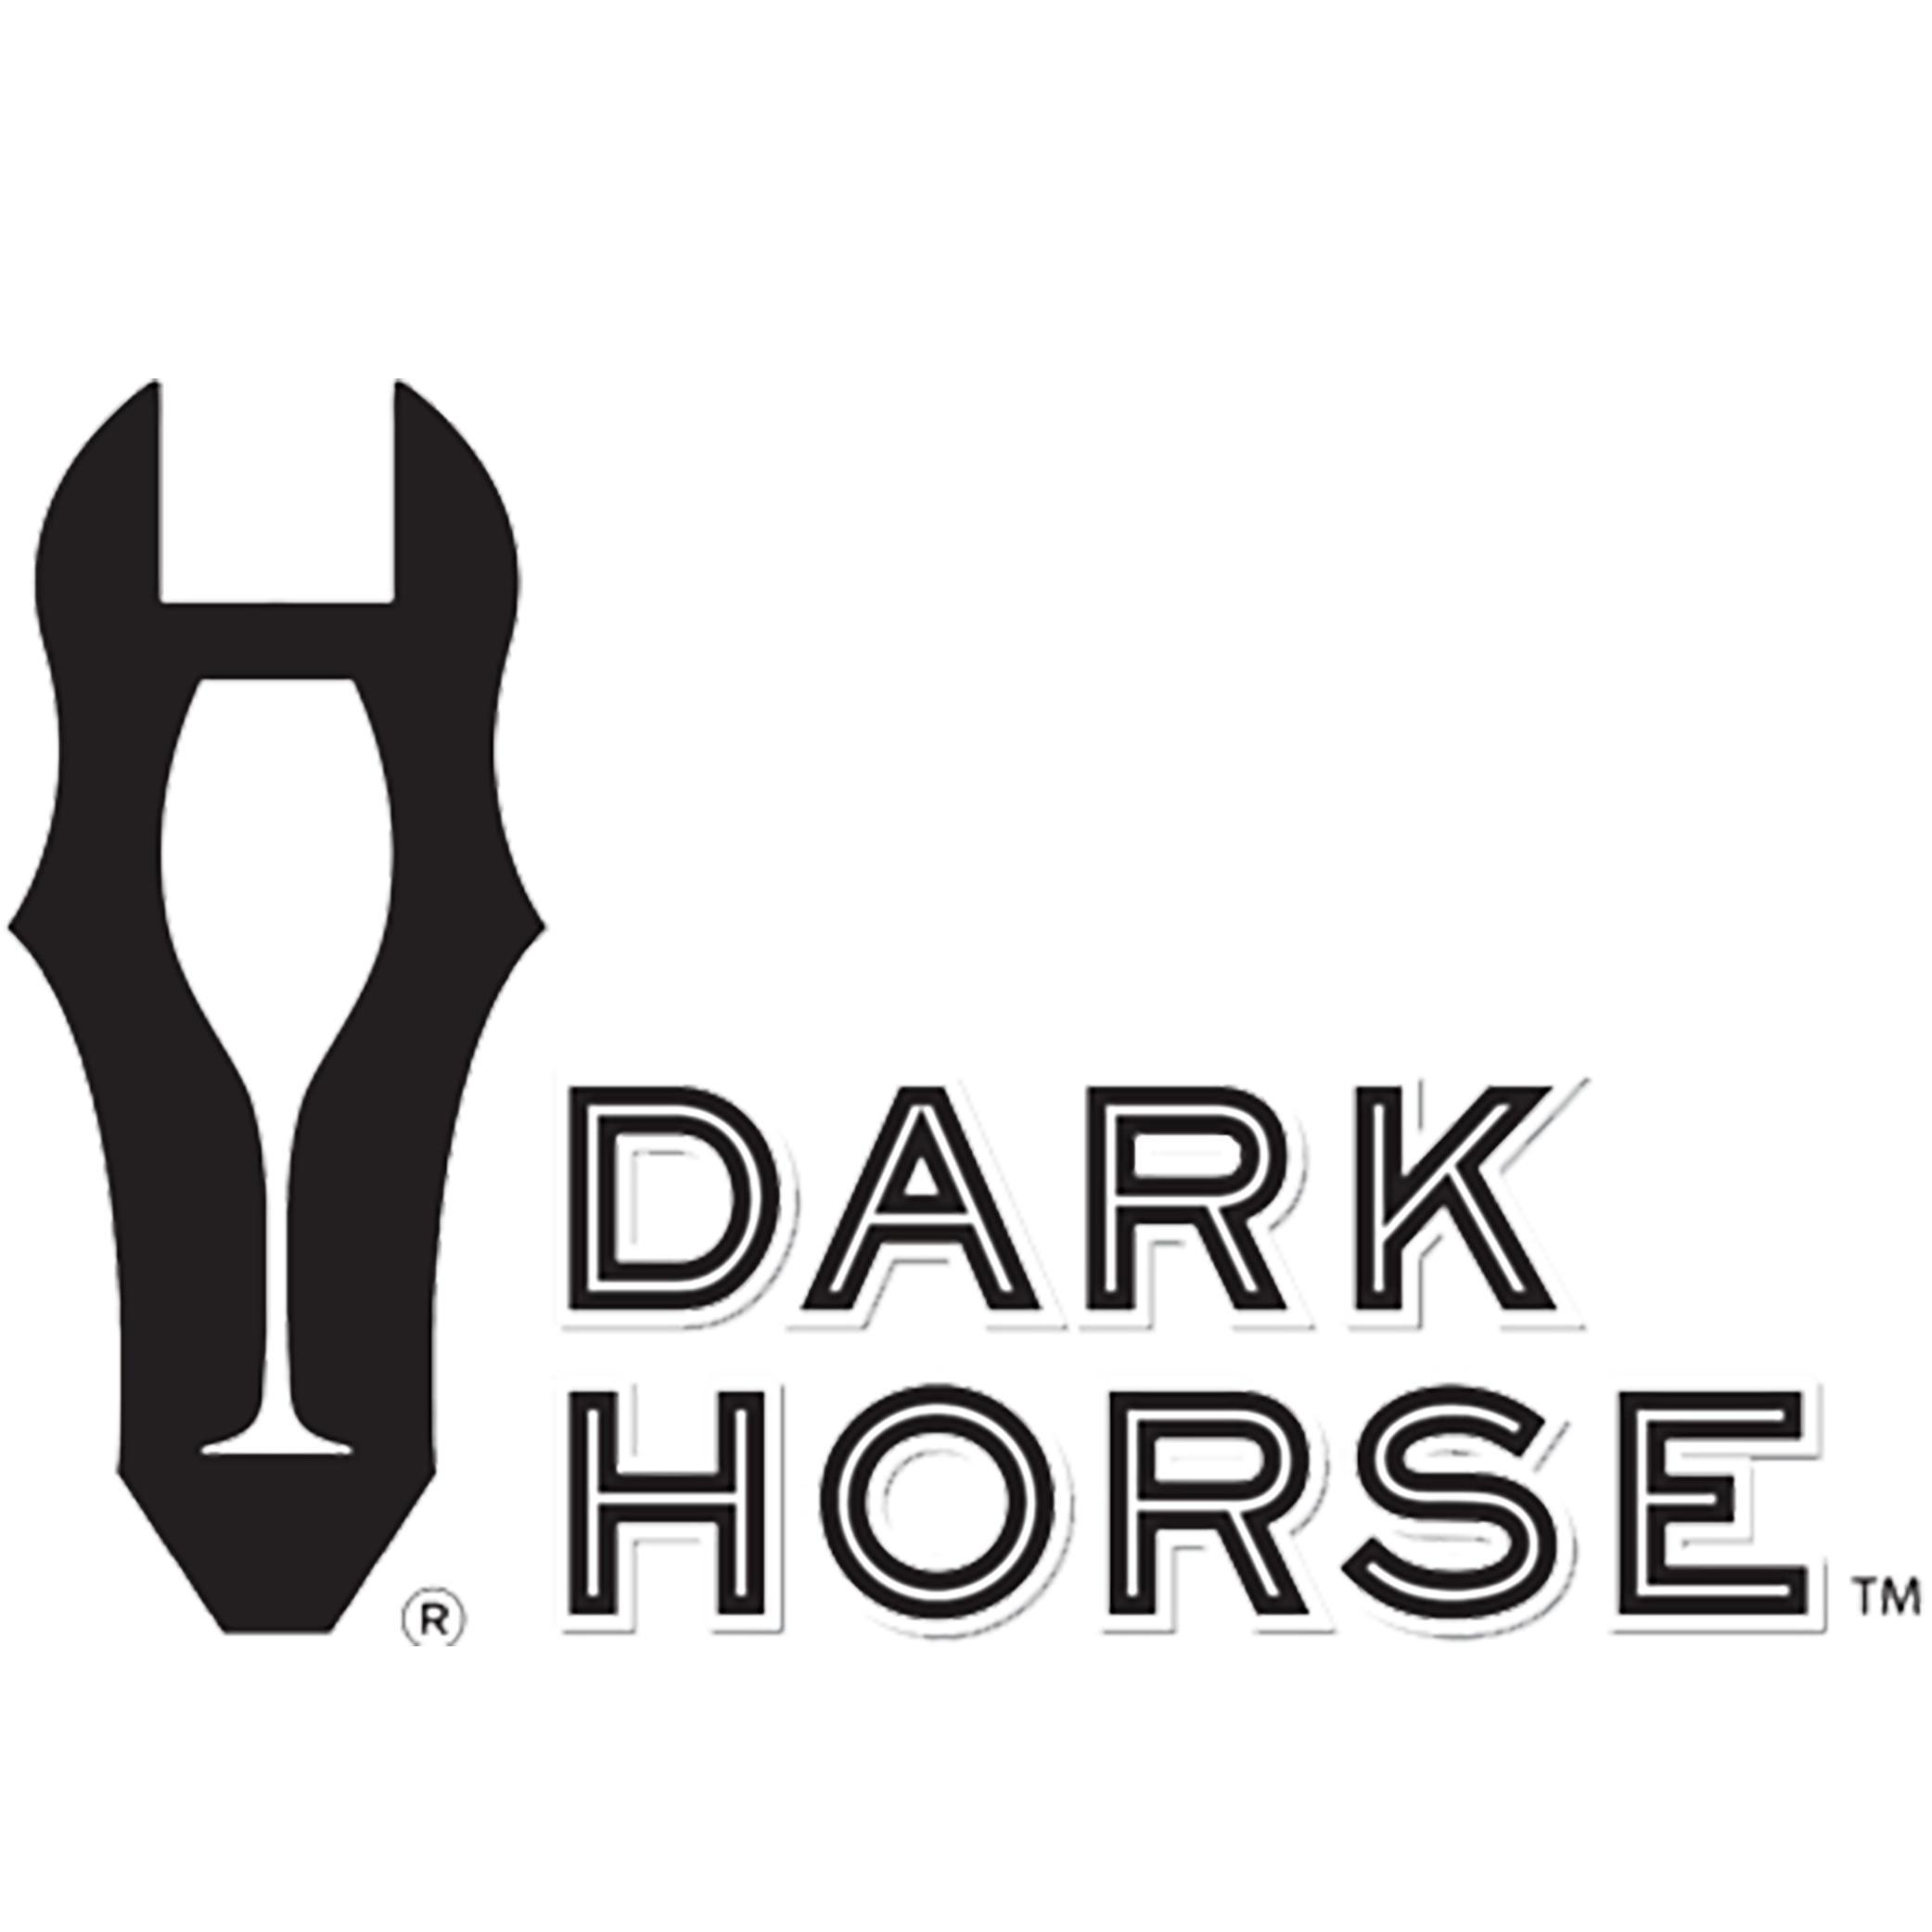 SF Horse Logo - Live Artsdark horse - Live Arts